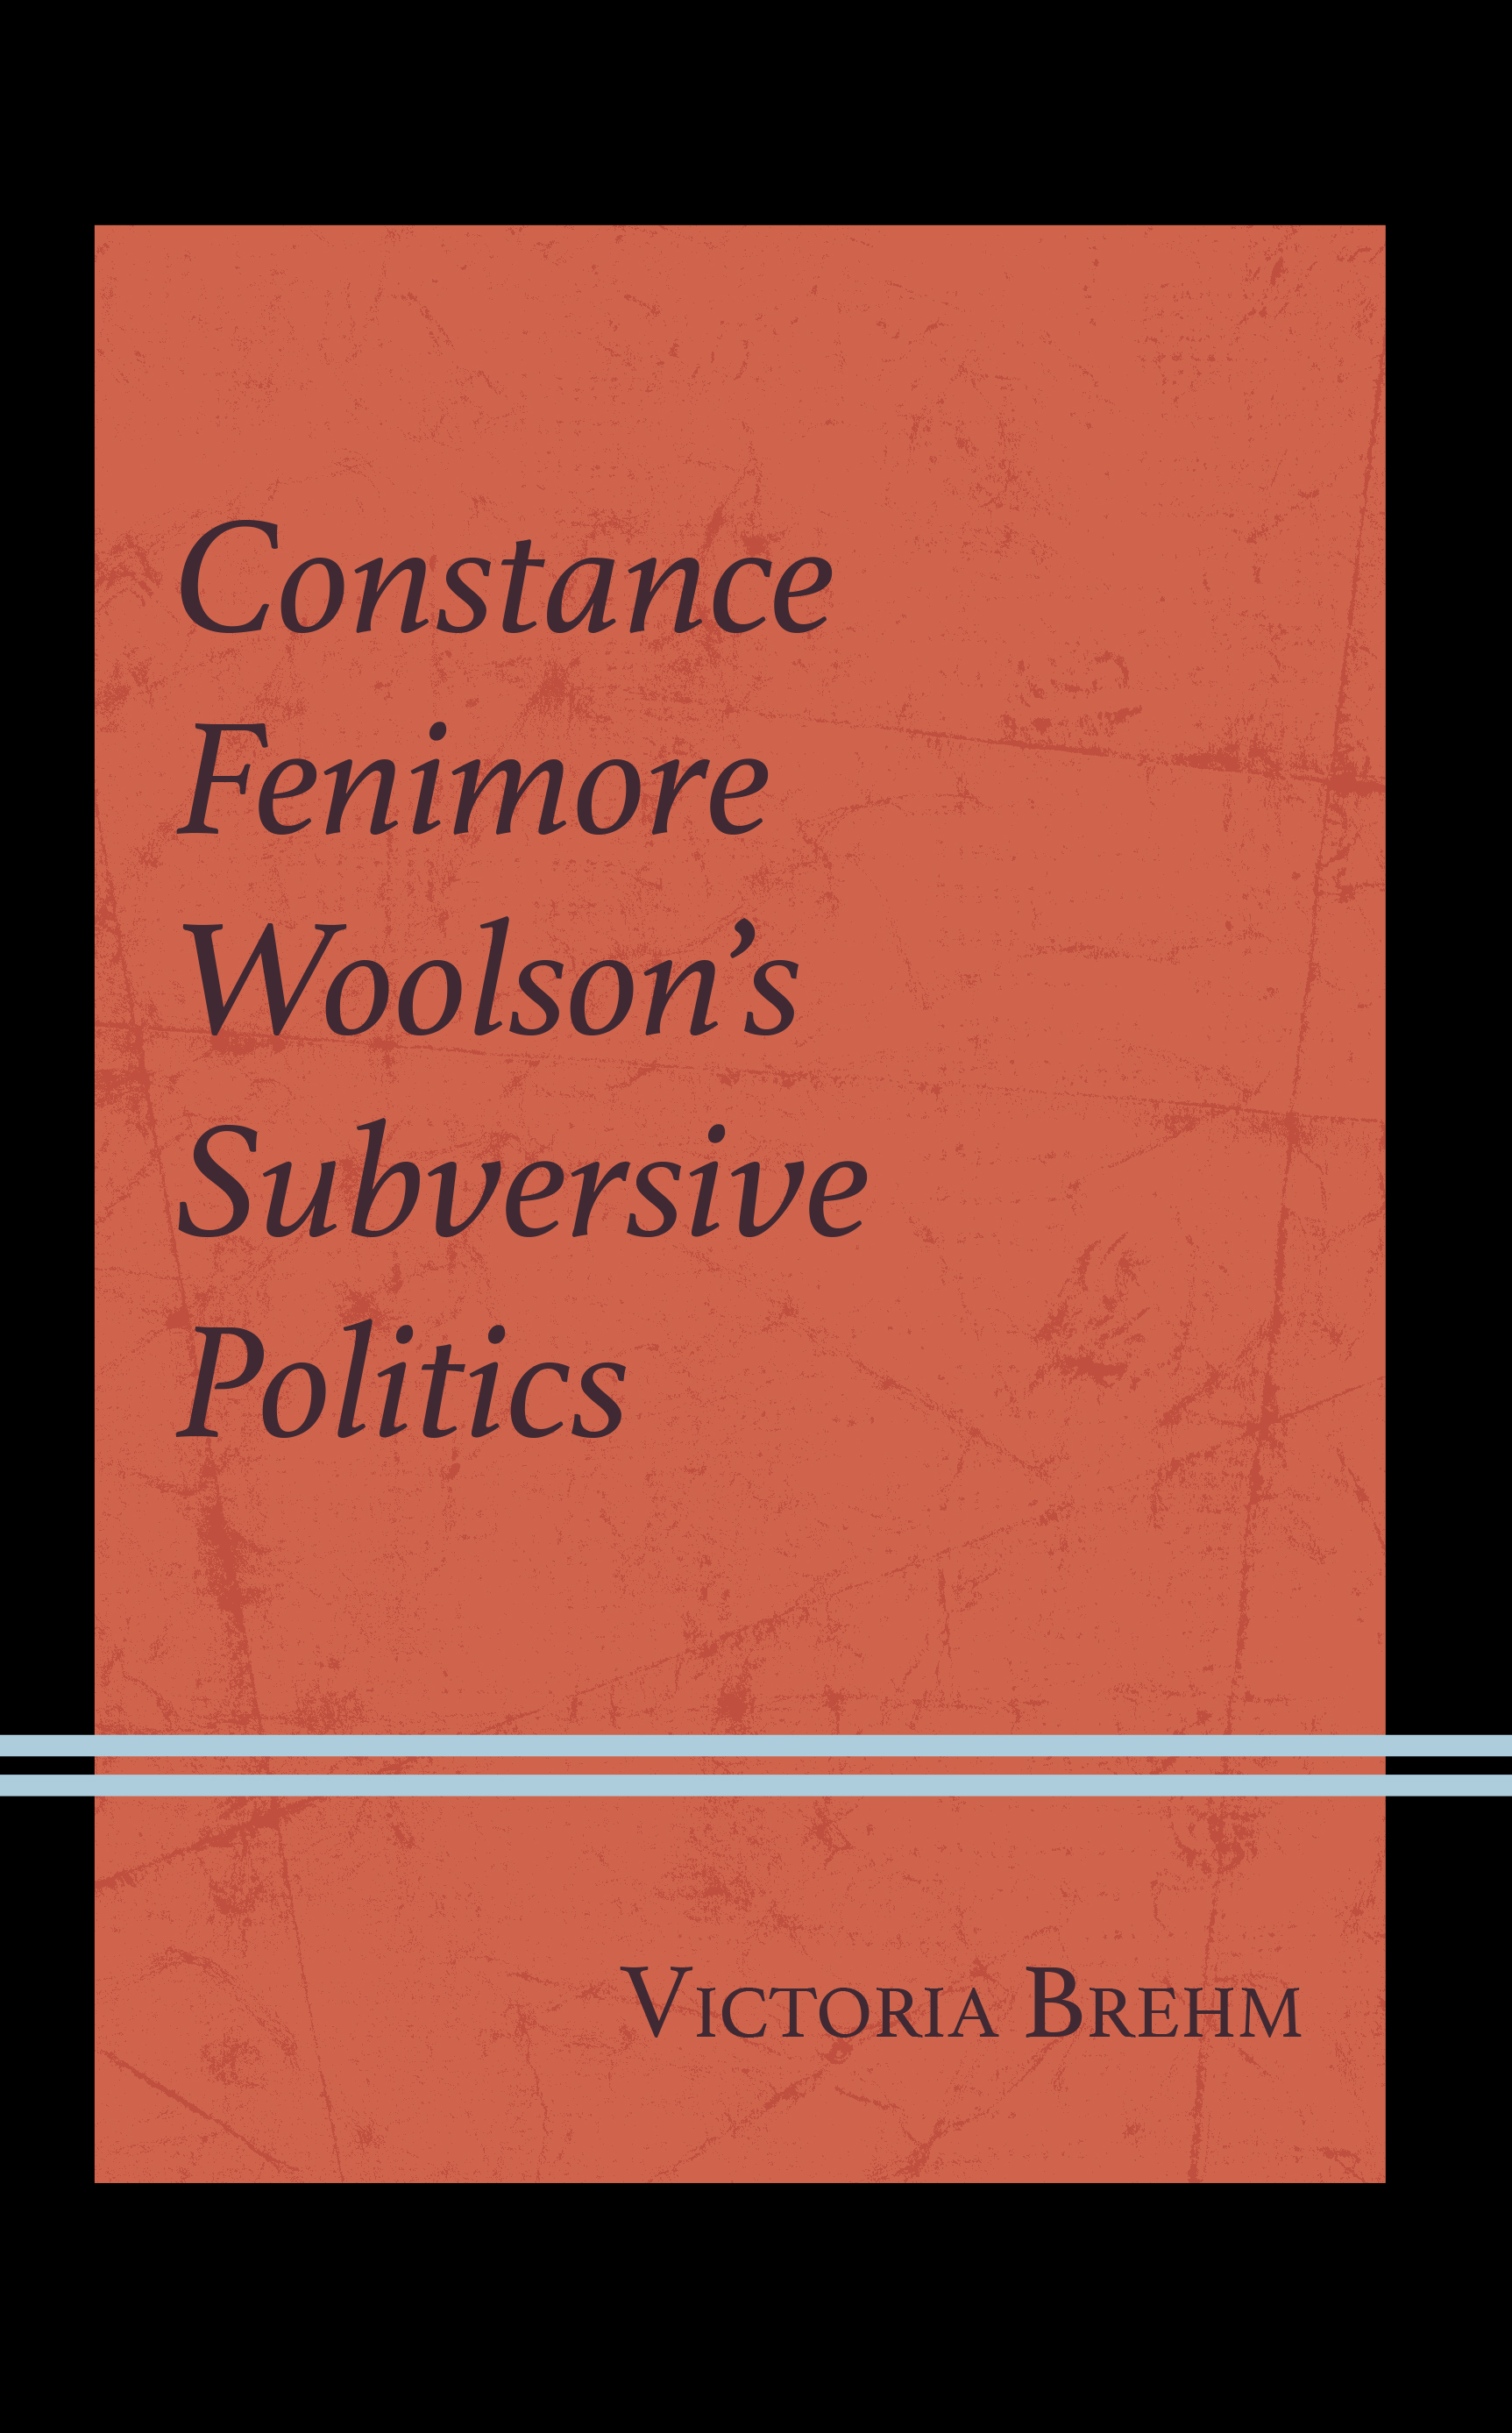 Constance Fenimore Woolson’s Subversive Politics